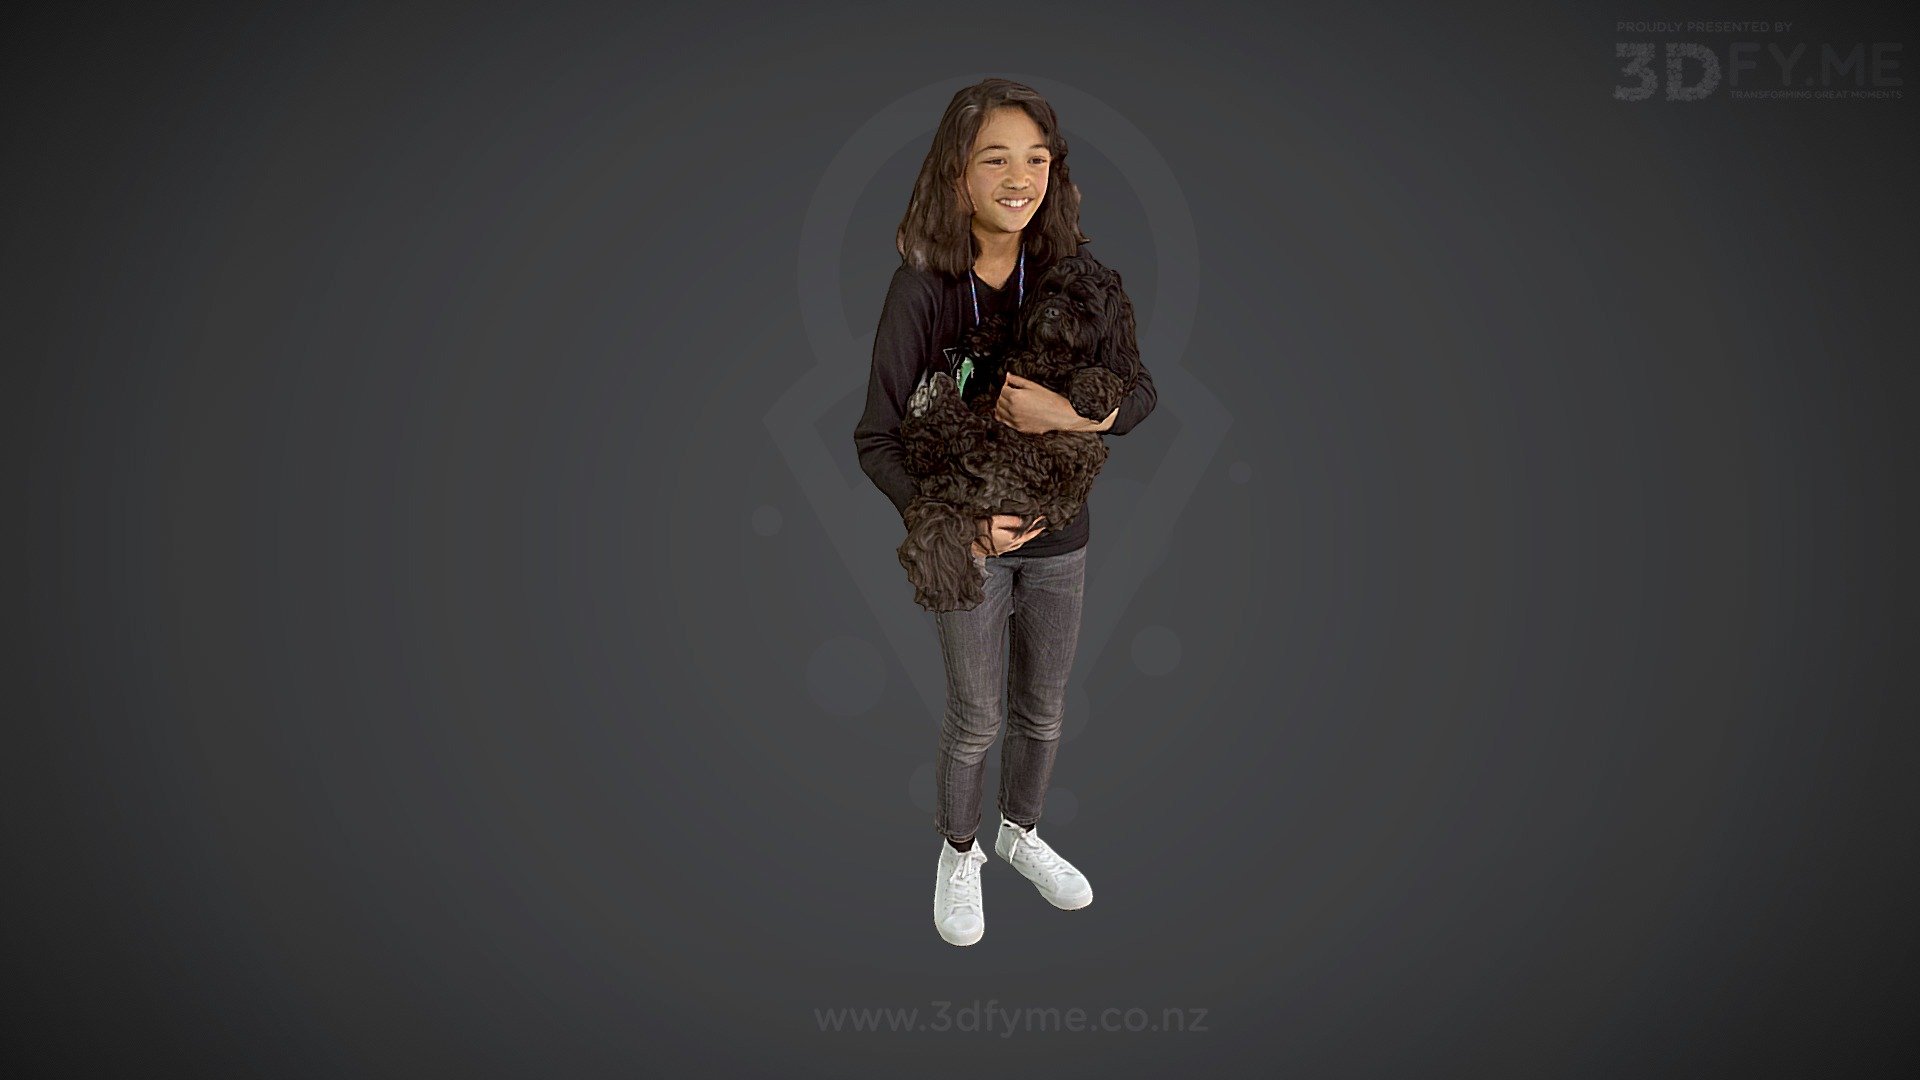 Tara and her new furry friend Murky&hellip; seems he's enjoying the ride&hellip; - Tara & Murky (raw scan) - 3D model by 3Dfy.me New Zealand (@smacher2016) 3d model